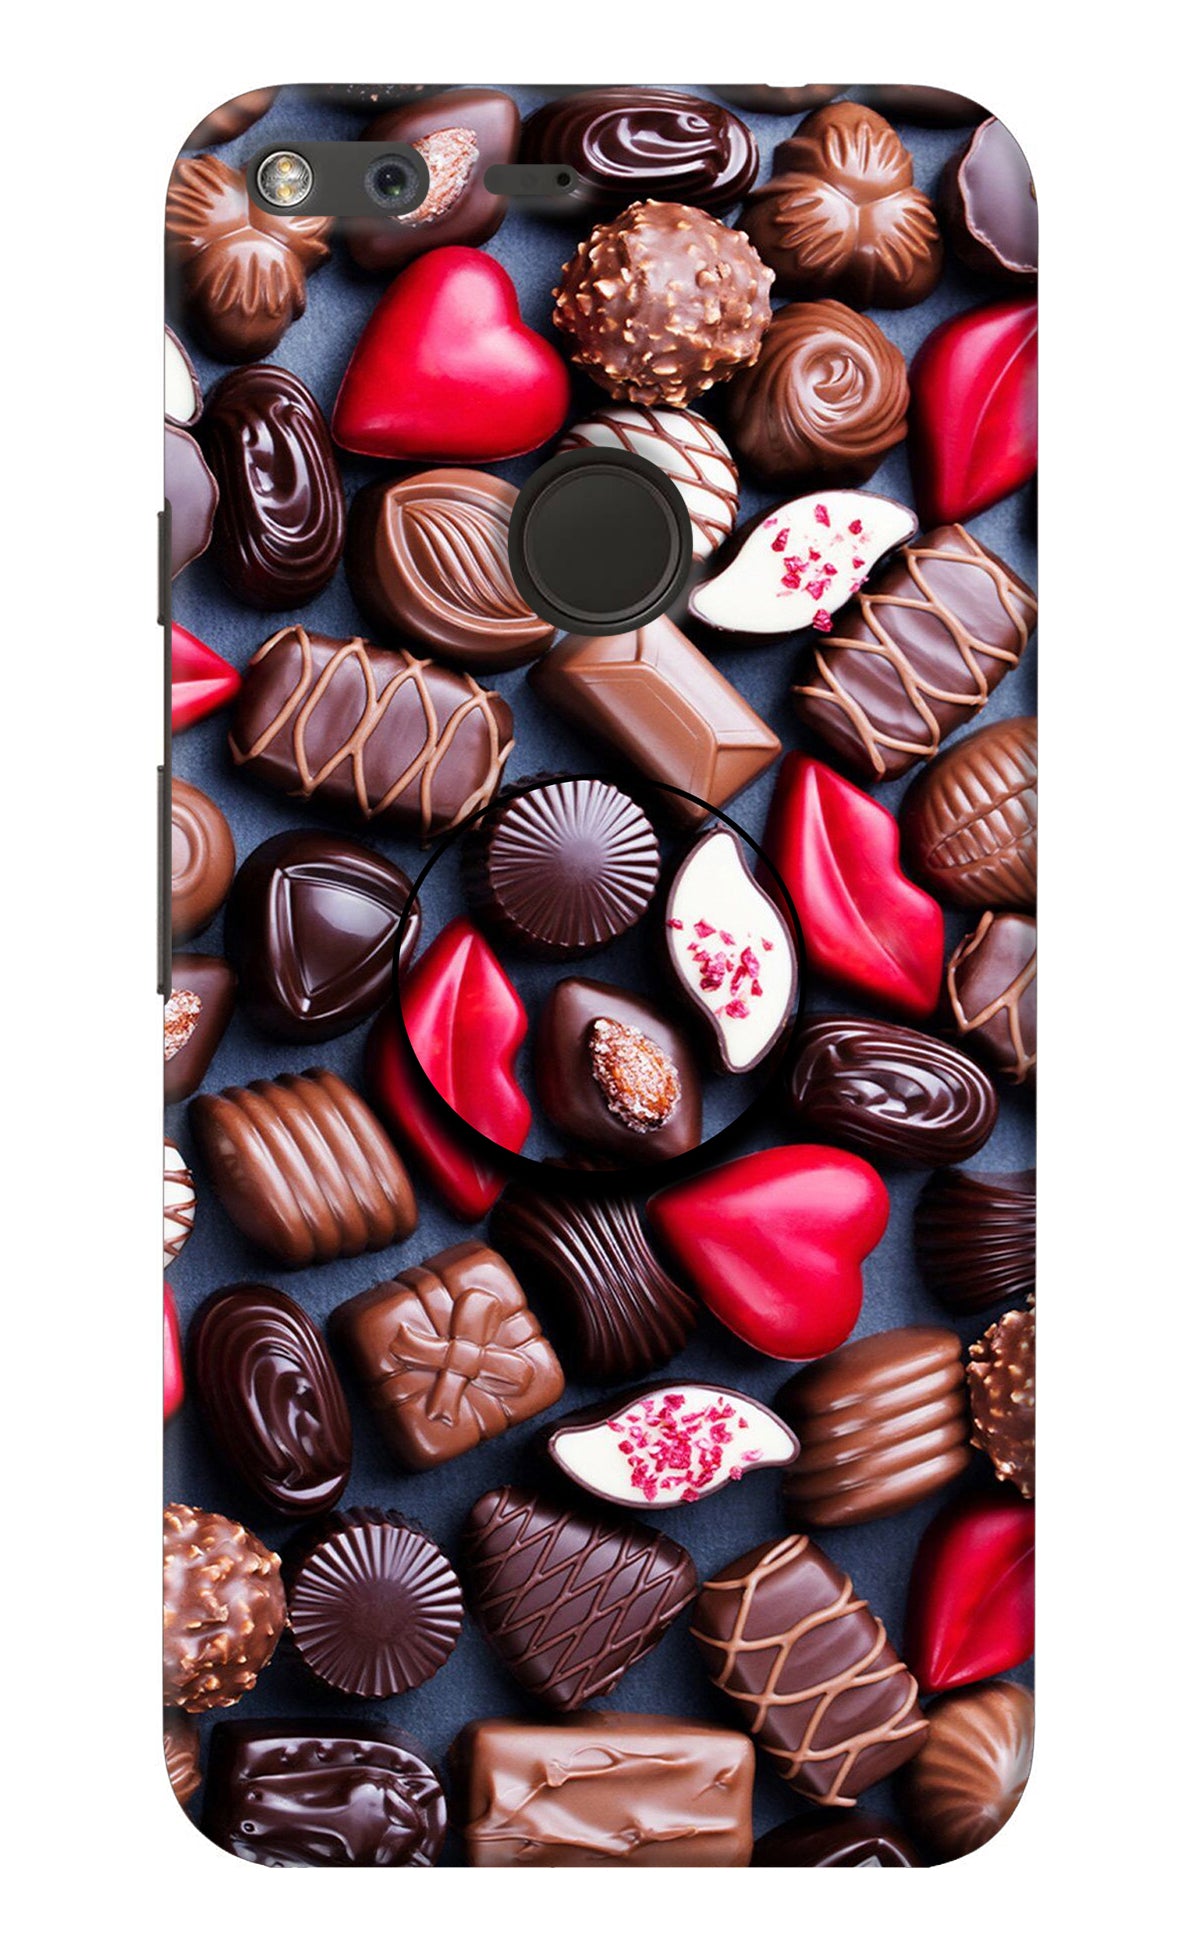 Chocolates Google Pixel XL Pop Case